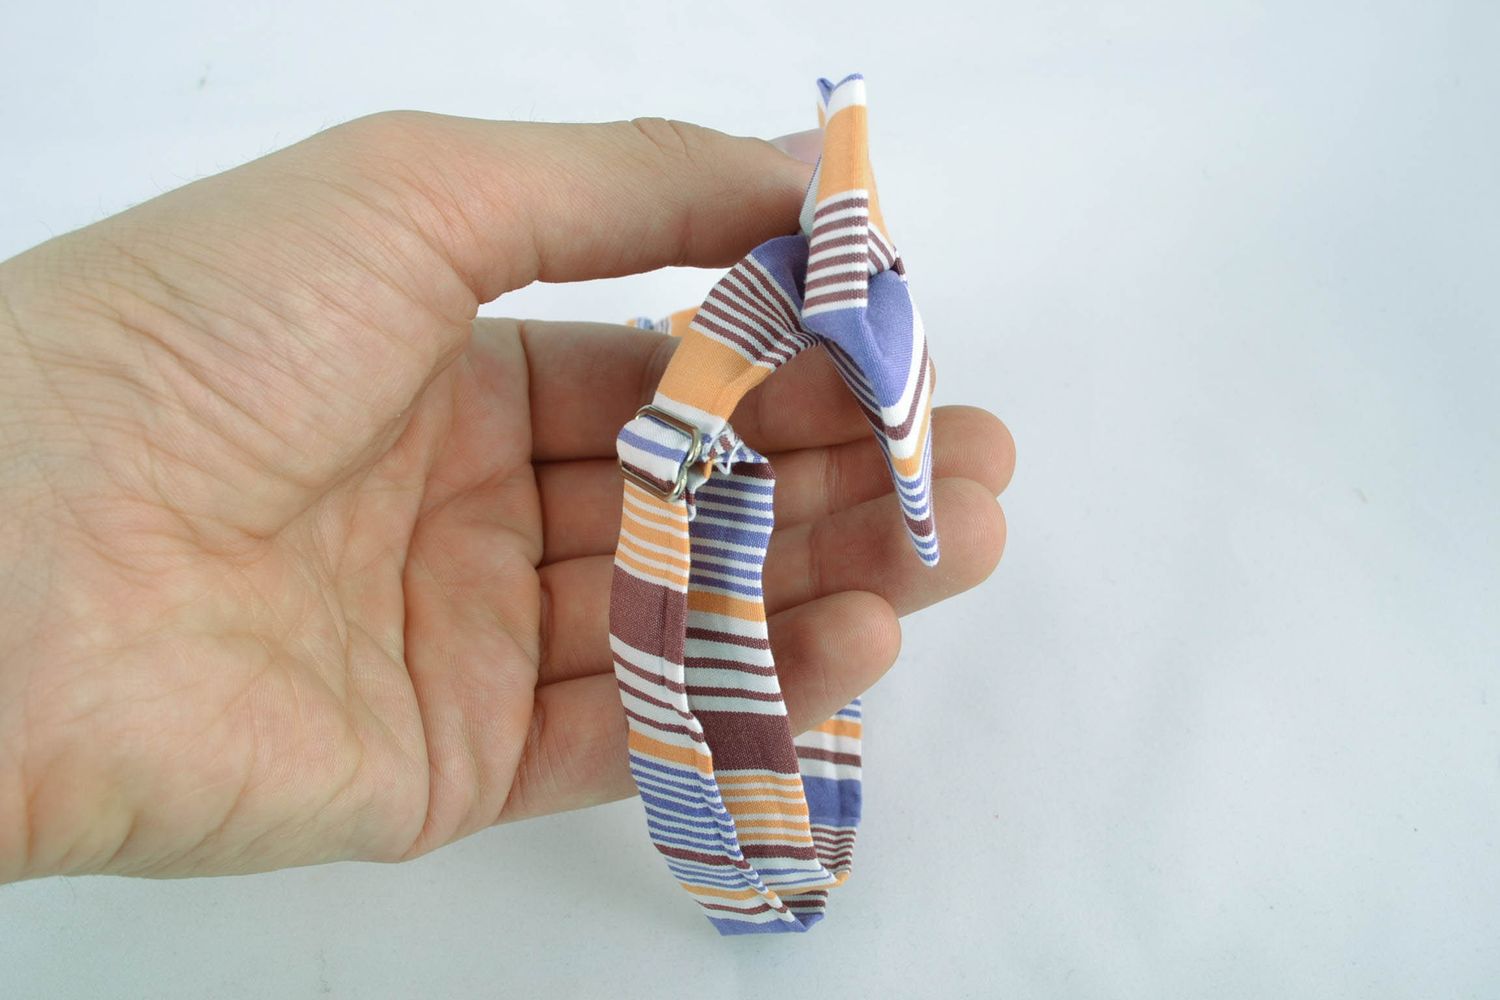 Striped fabric bow tie photo 2